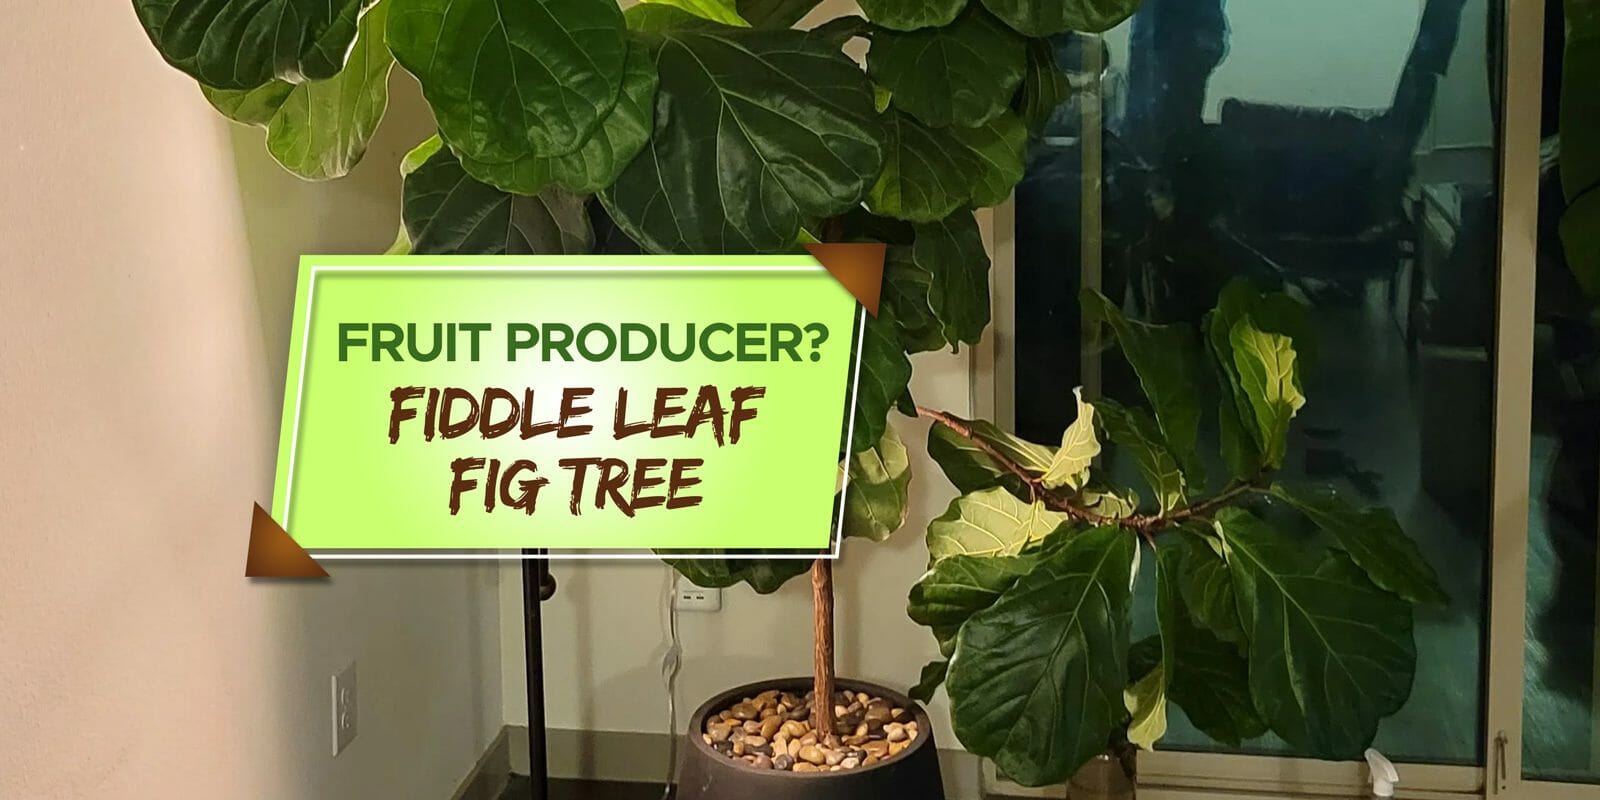 do fiddle leaf fig trees produce fruit